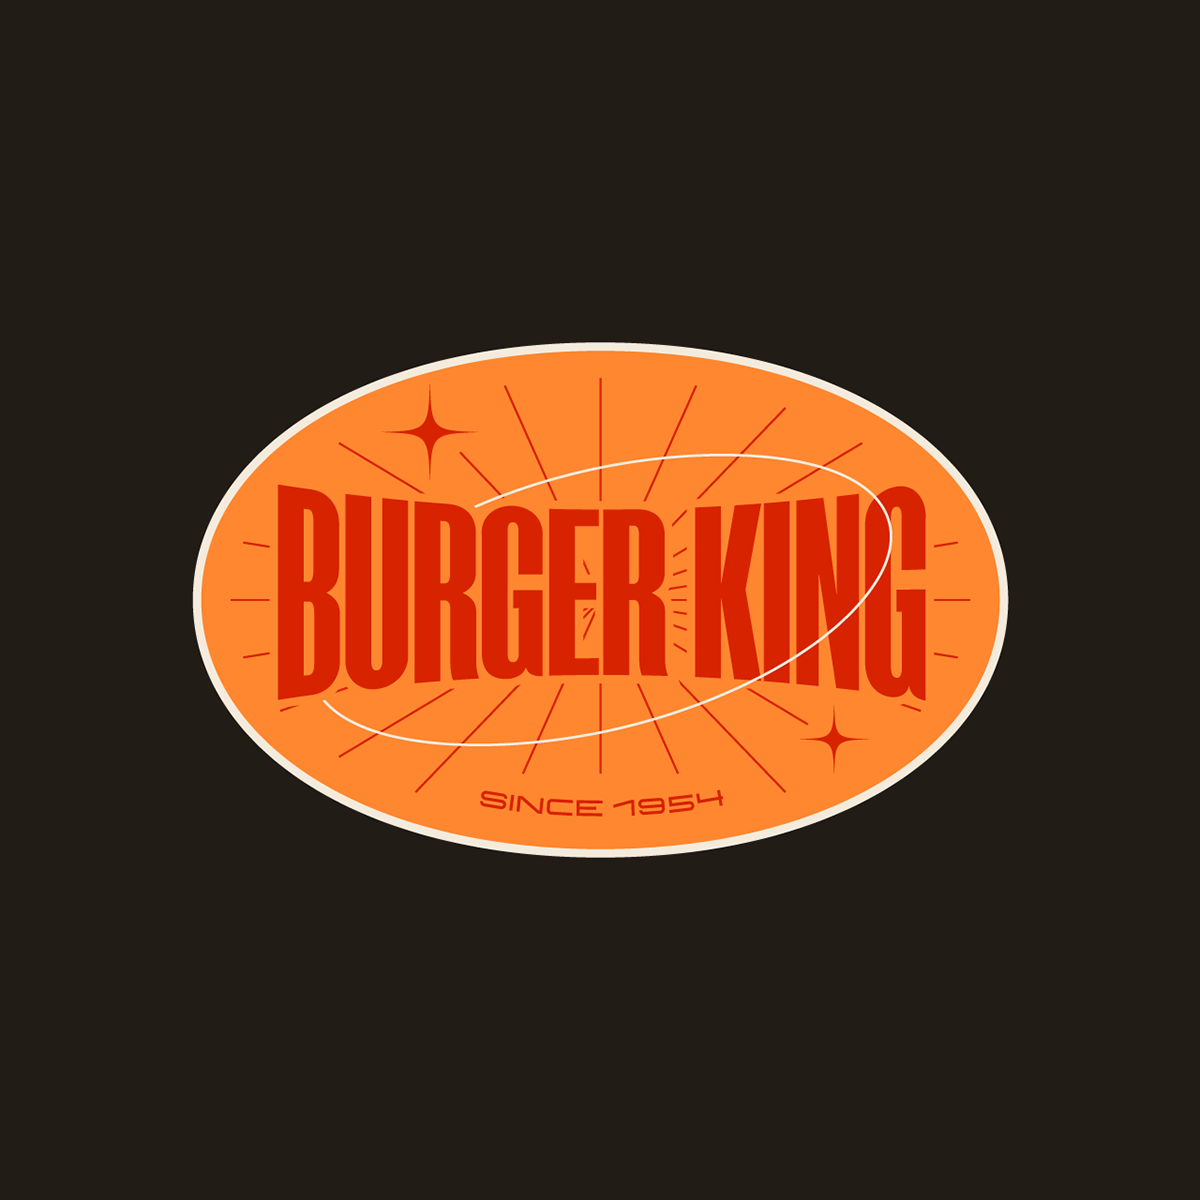 1984 george orwell adidas Burger King japan Netflix Nike patagonia Retro tokyo uniqlo